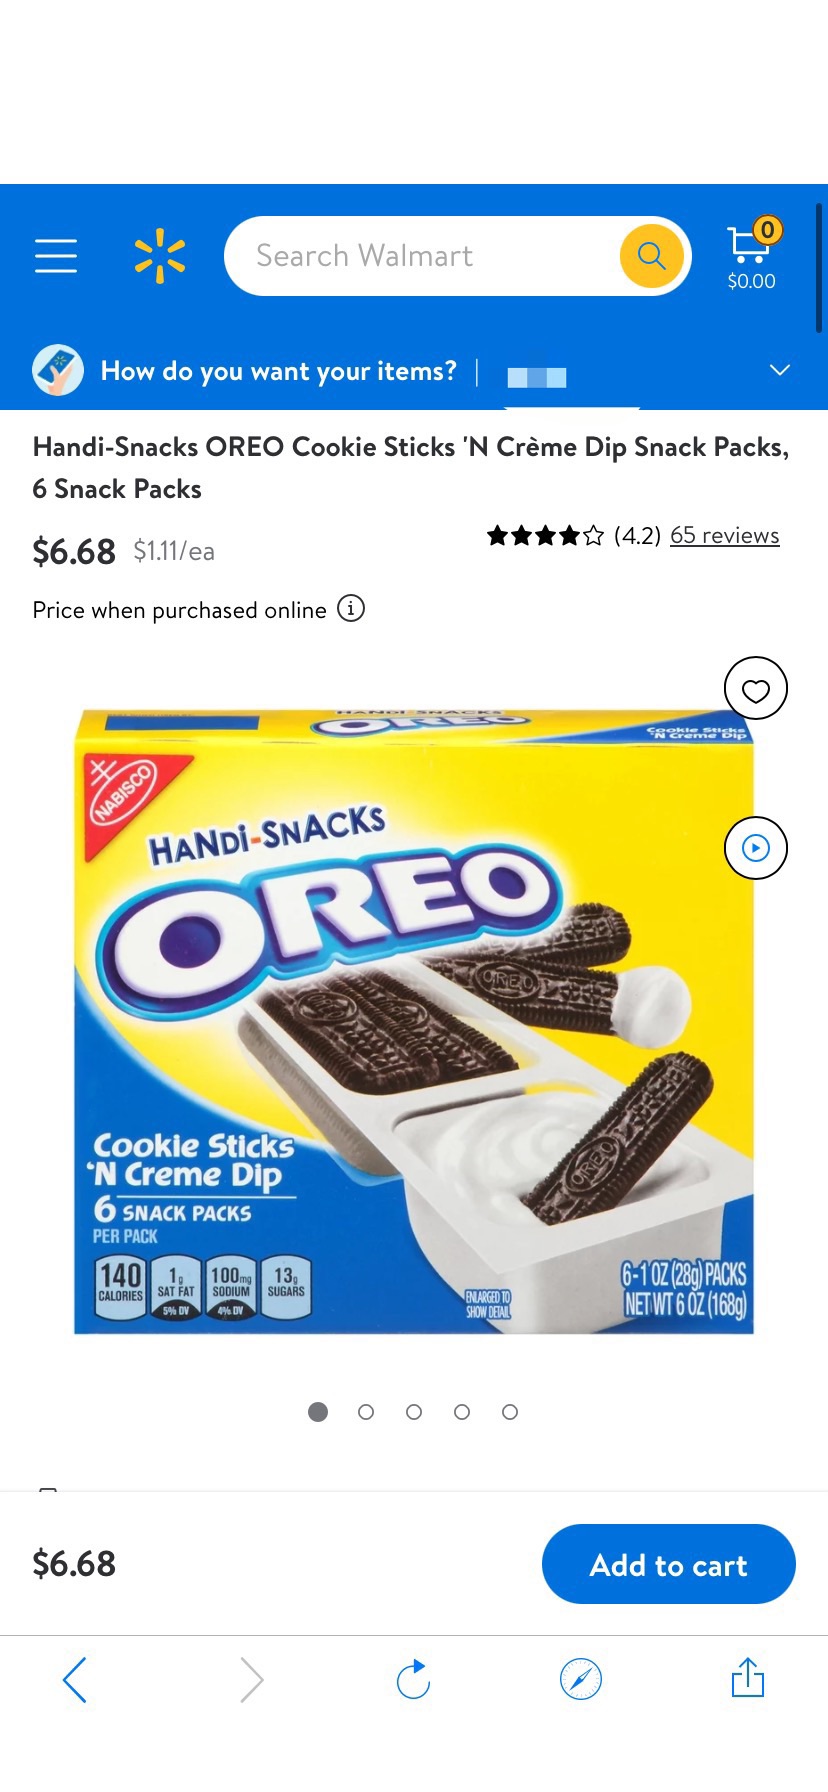 Handi-Snacks OREO Cookie Sticks 'N Crème Dip Snack Packs, 6 Snack Packs - Walmart.com